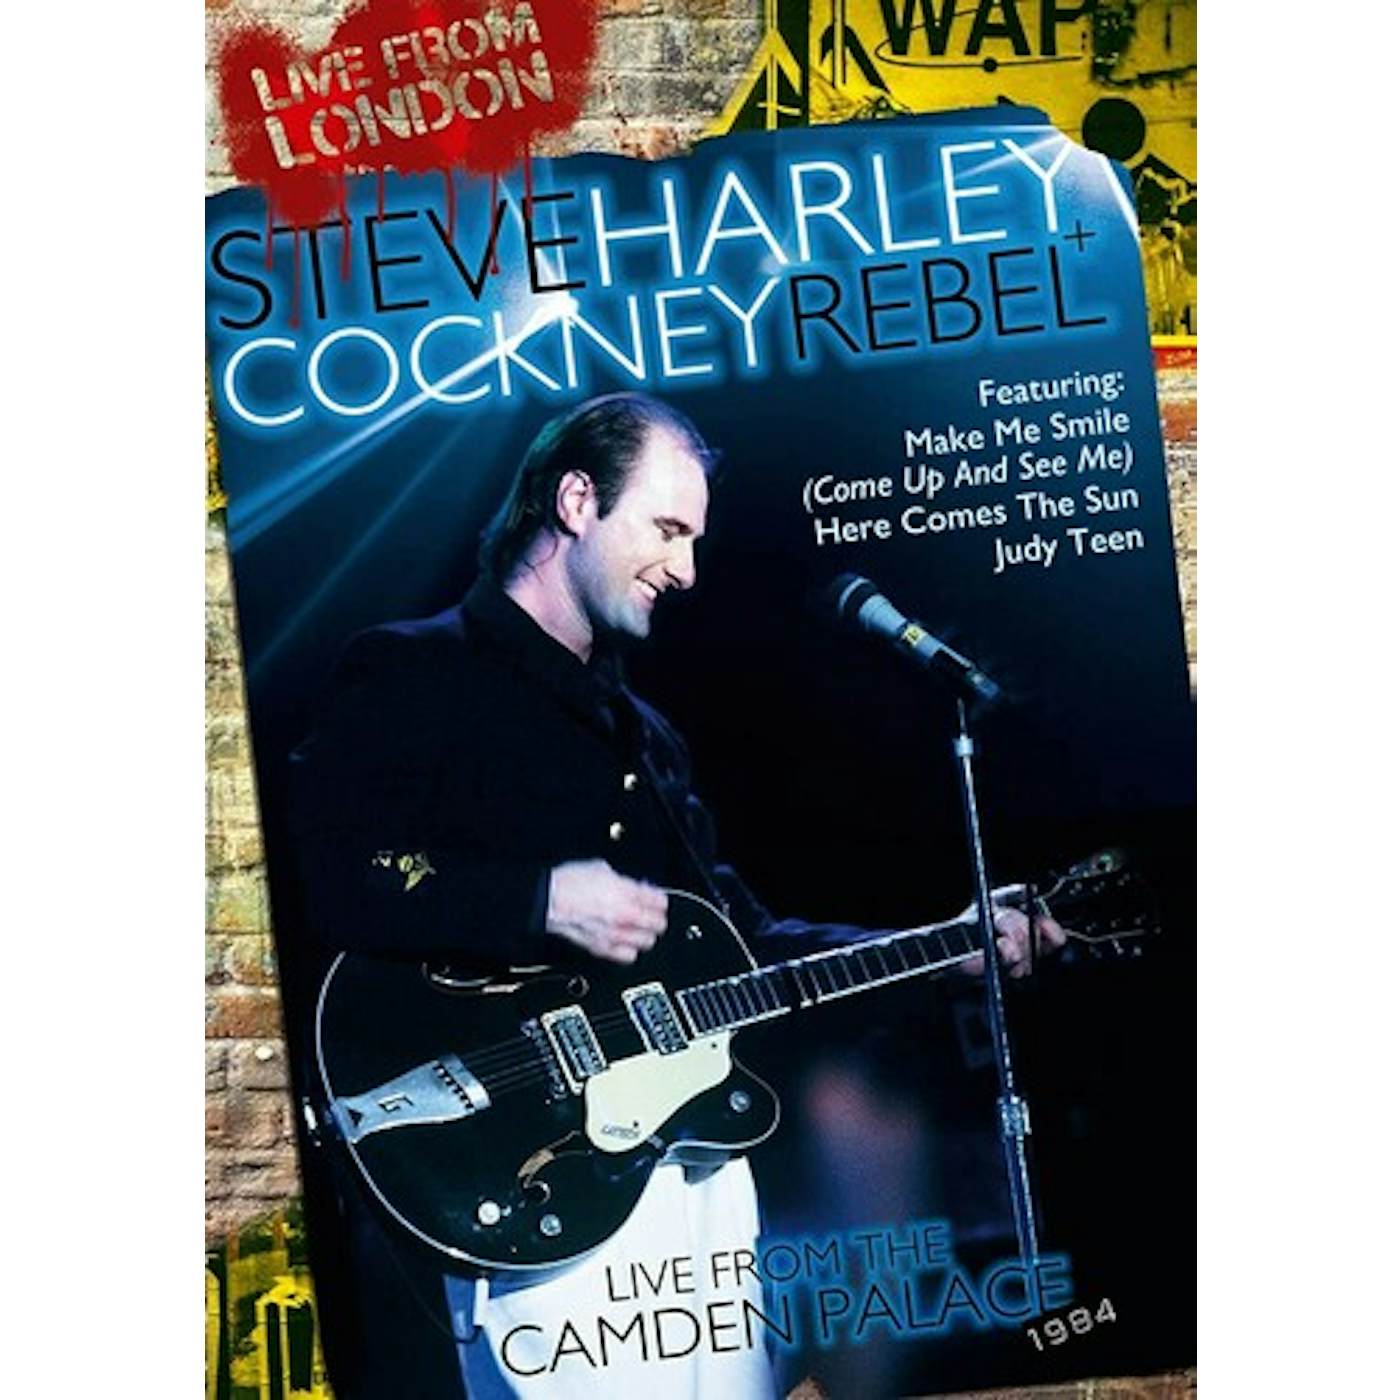 Steve Harley & Cockney Rebel LIVE FROM LONDON DVD